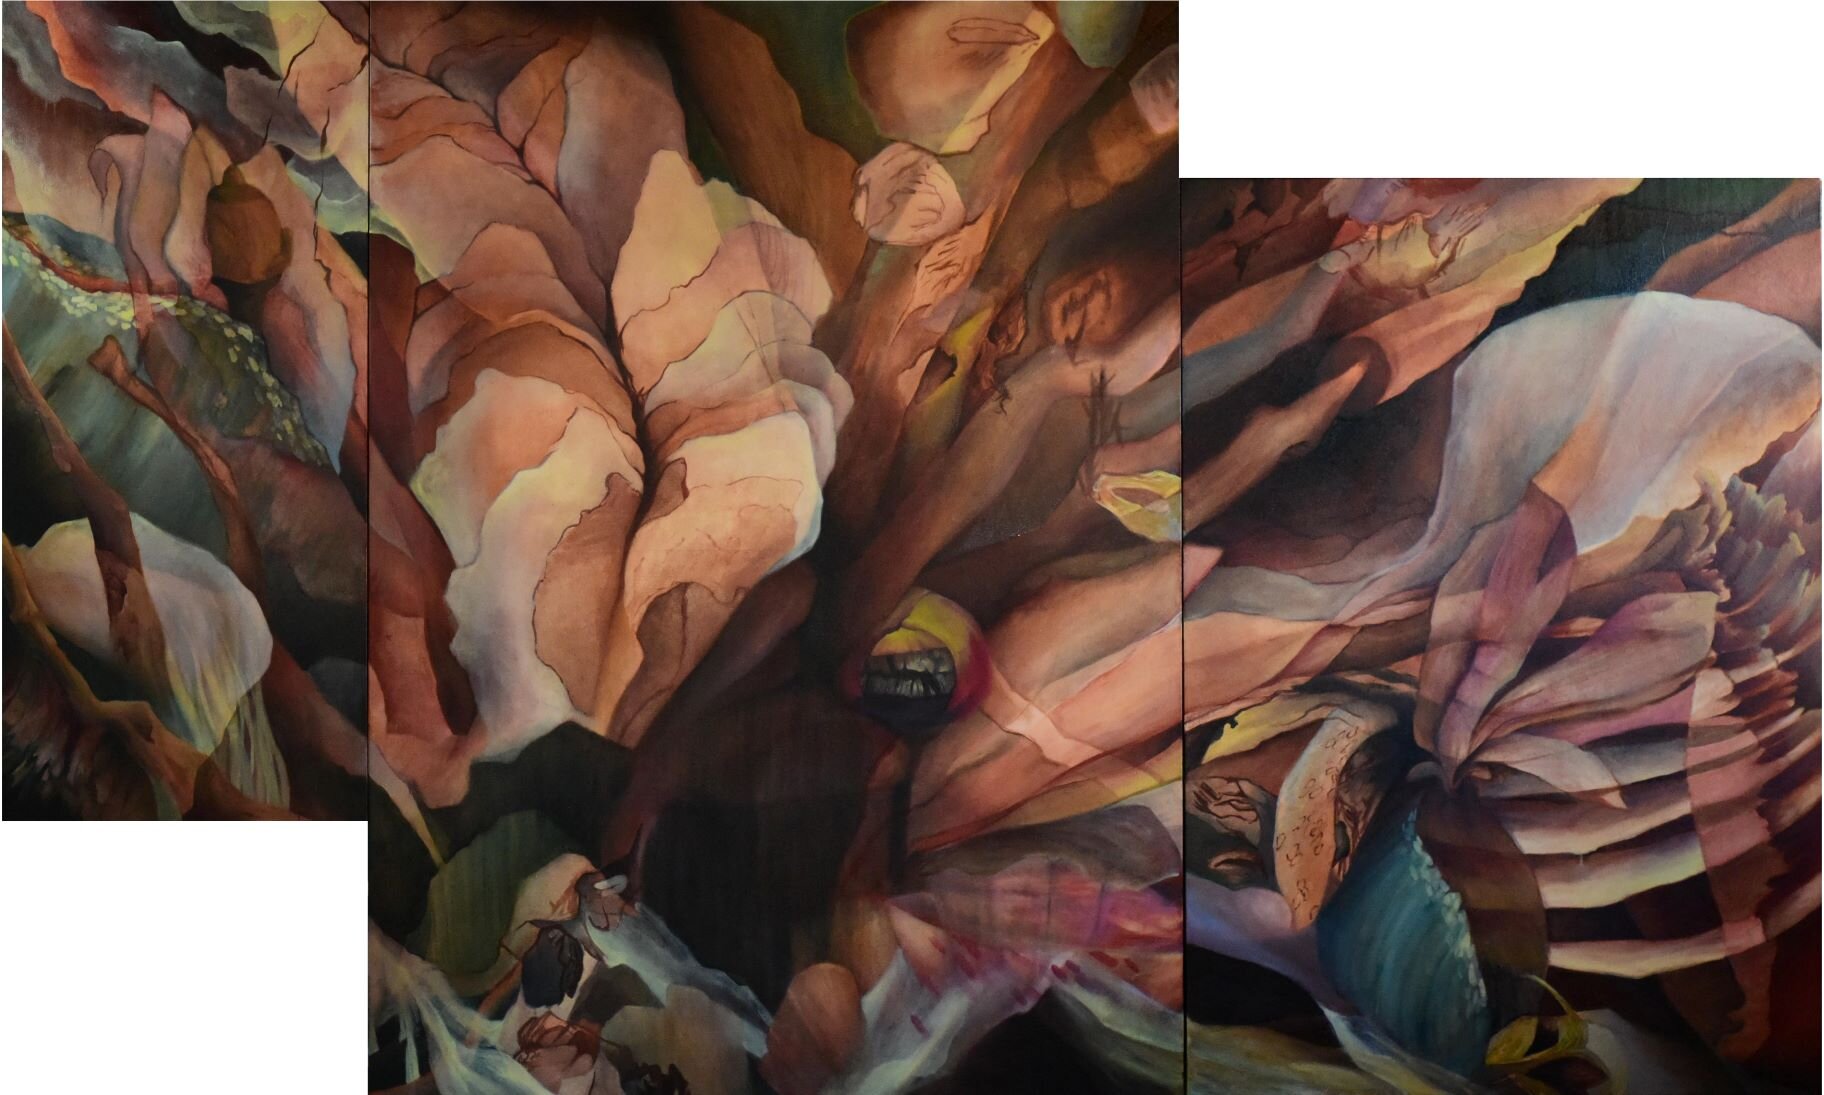   Cyclic.  Oil on canvas. Triptych: 24”x48”; 48”x 72”; 48”x 60”. 2020  